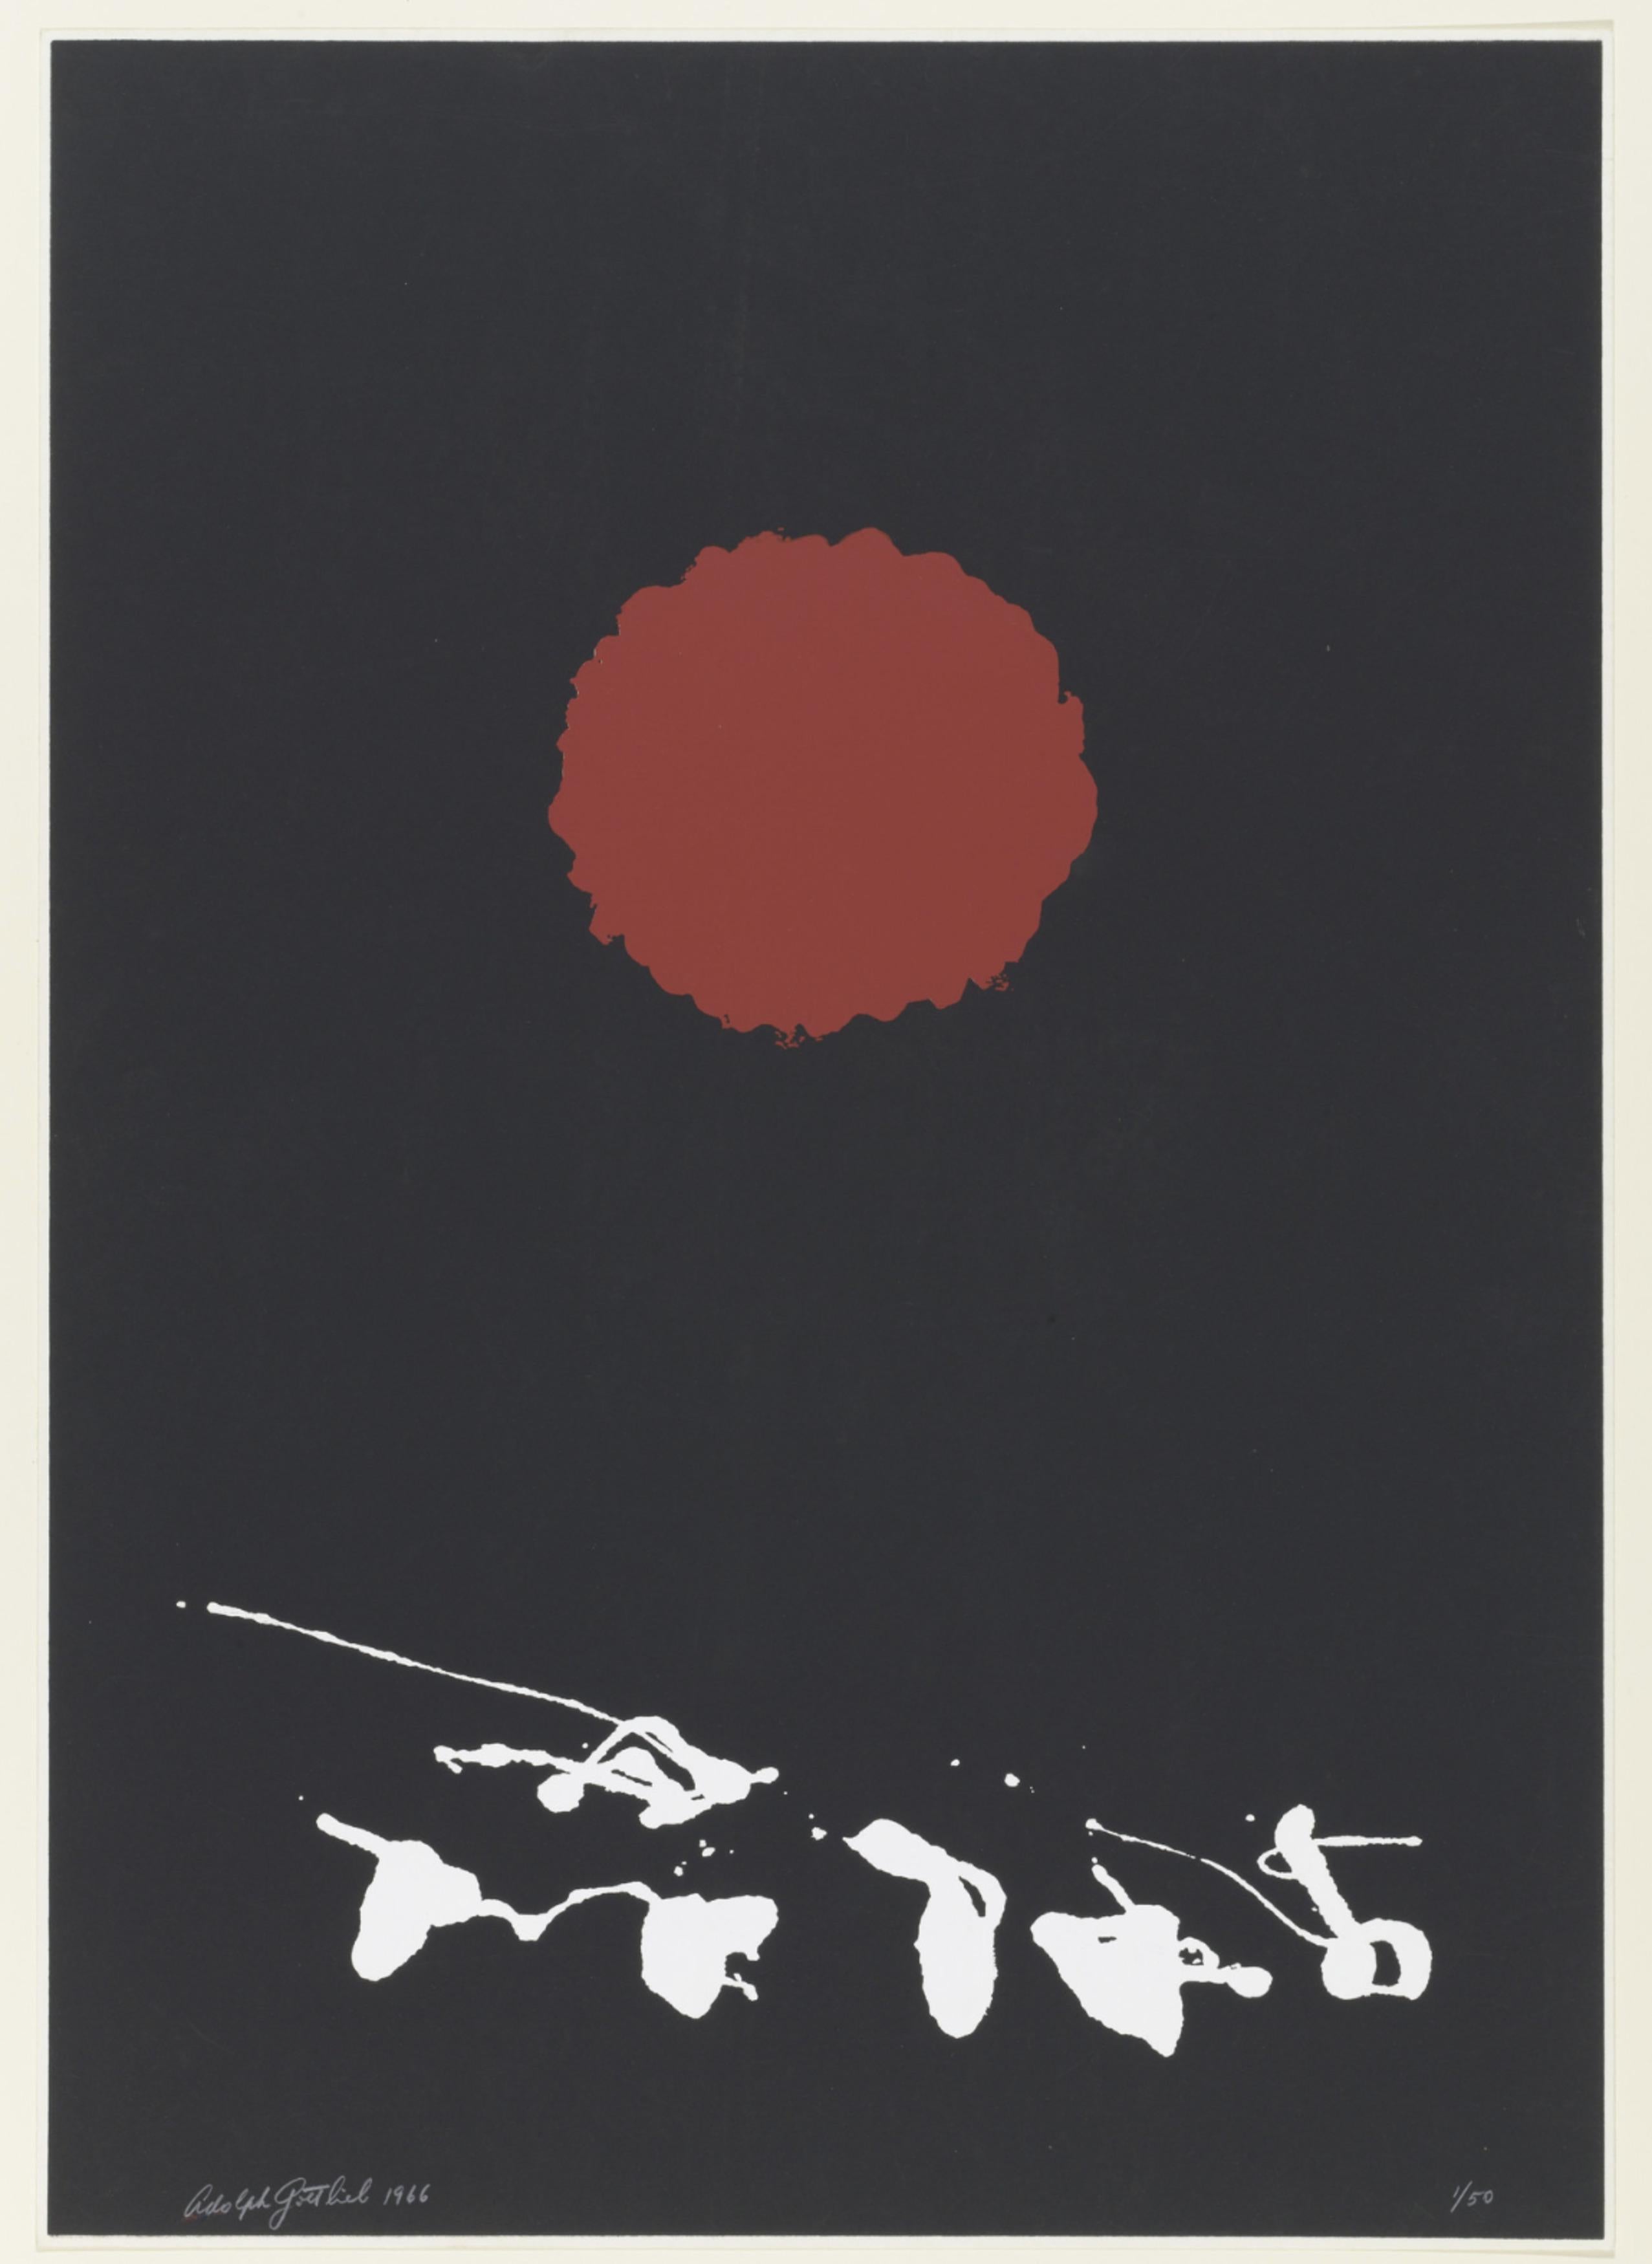 Black Ground, Red Disc - Print by Adolph Gottlieb